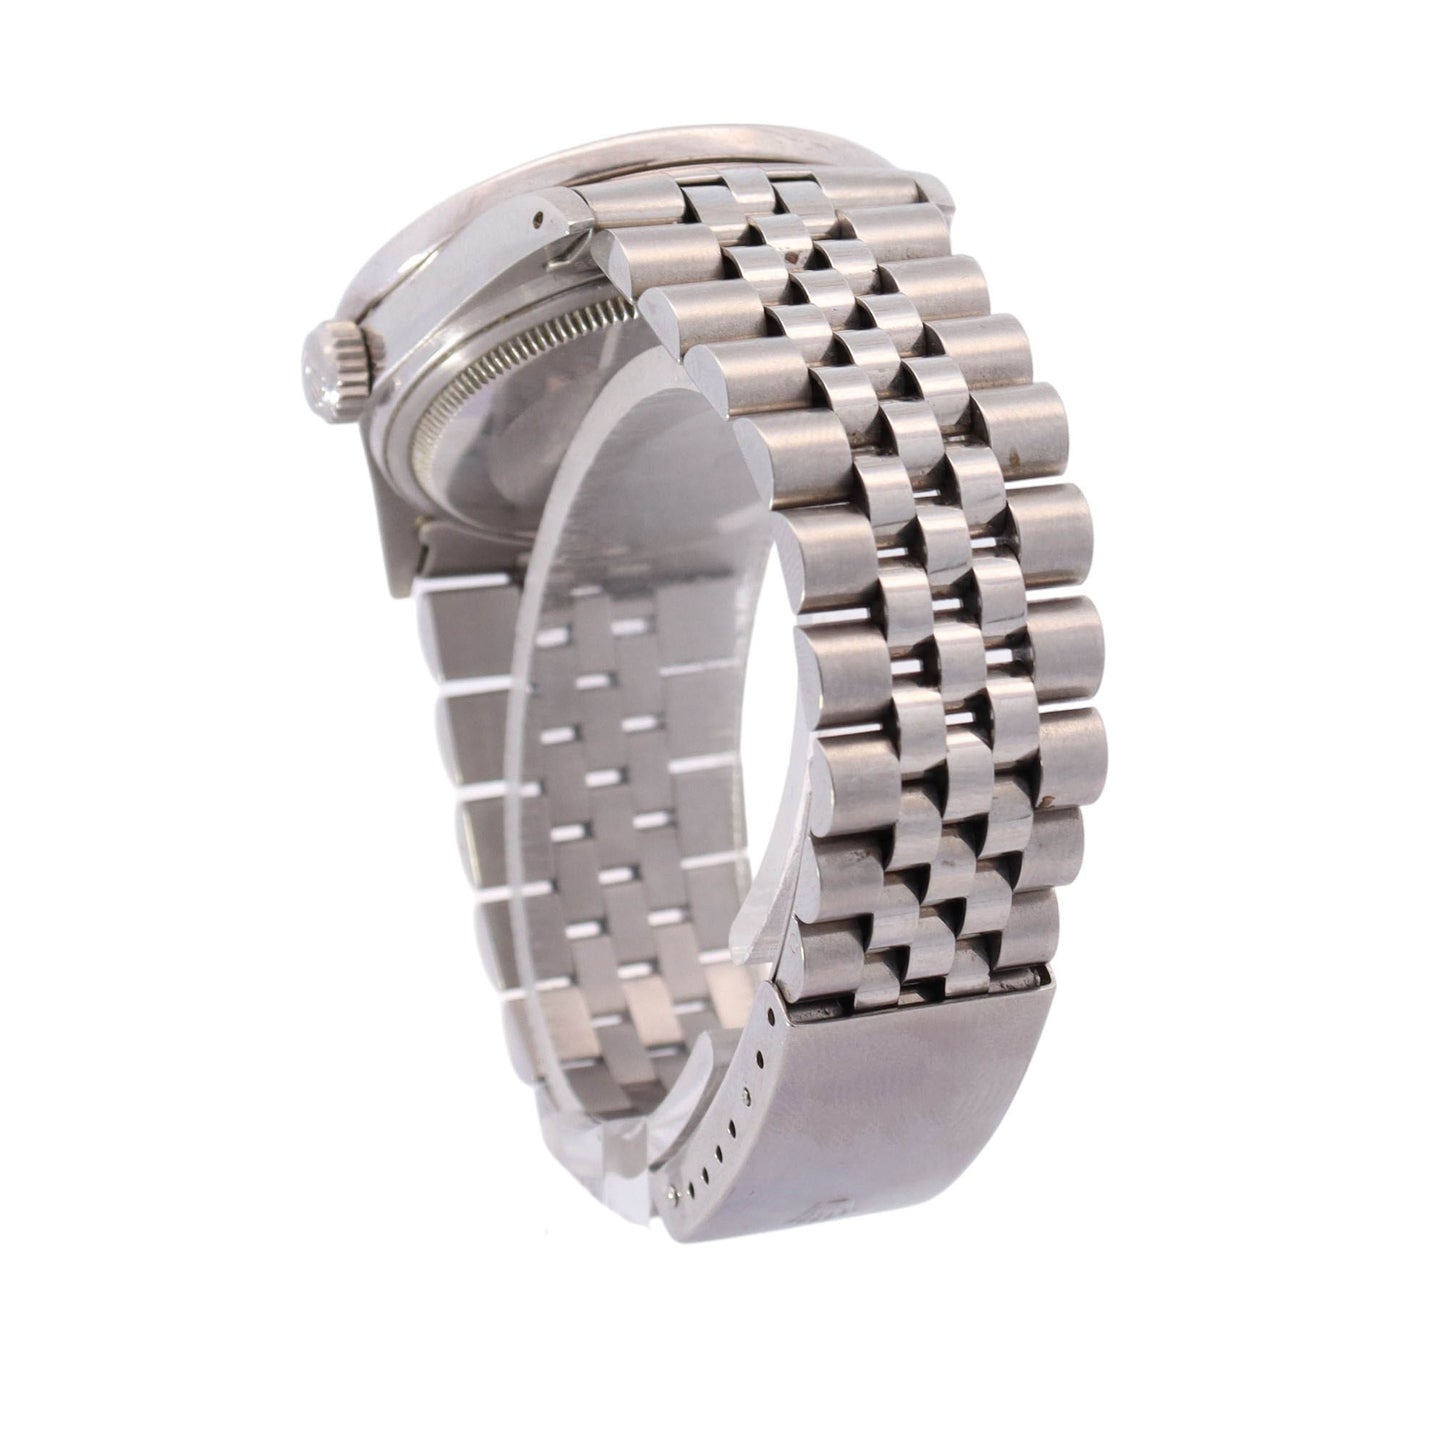 Rolex Datejust Stainless Steel 36mm Silver Stick Dial Watch Reference #: 16234 - Happy Jewelers Fine Jewelry Lifetime Warranty